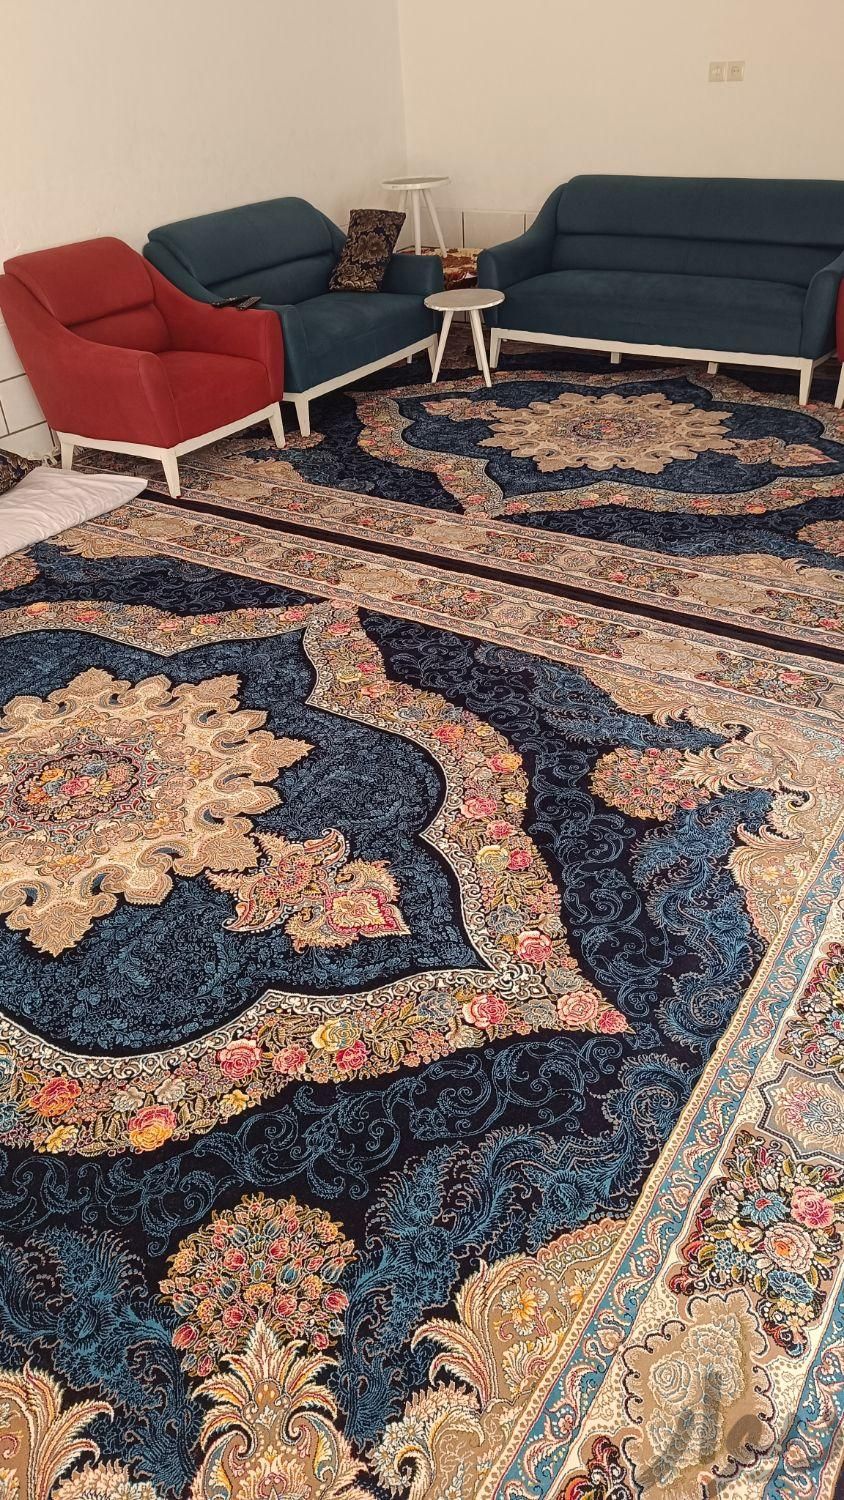 فرش|فرش|زرقان, |دیوار